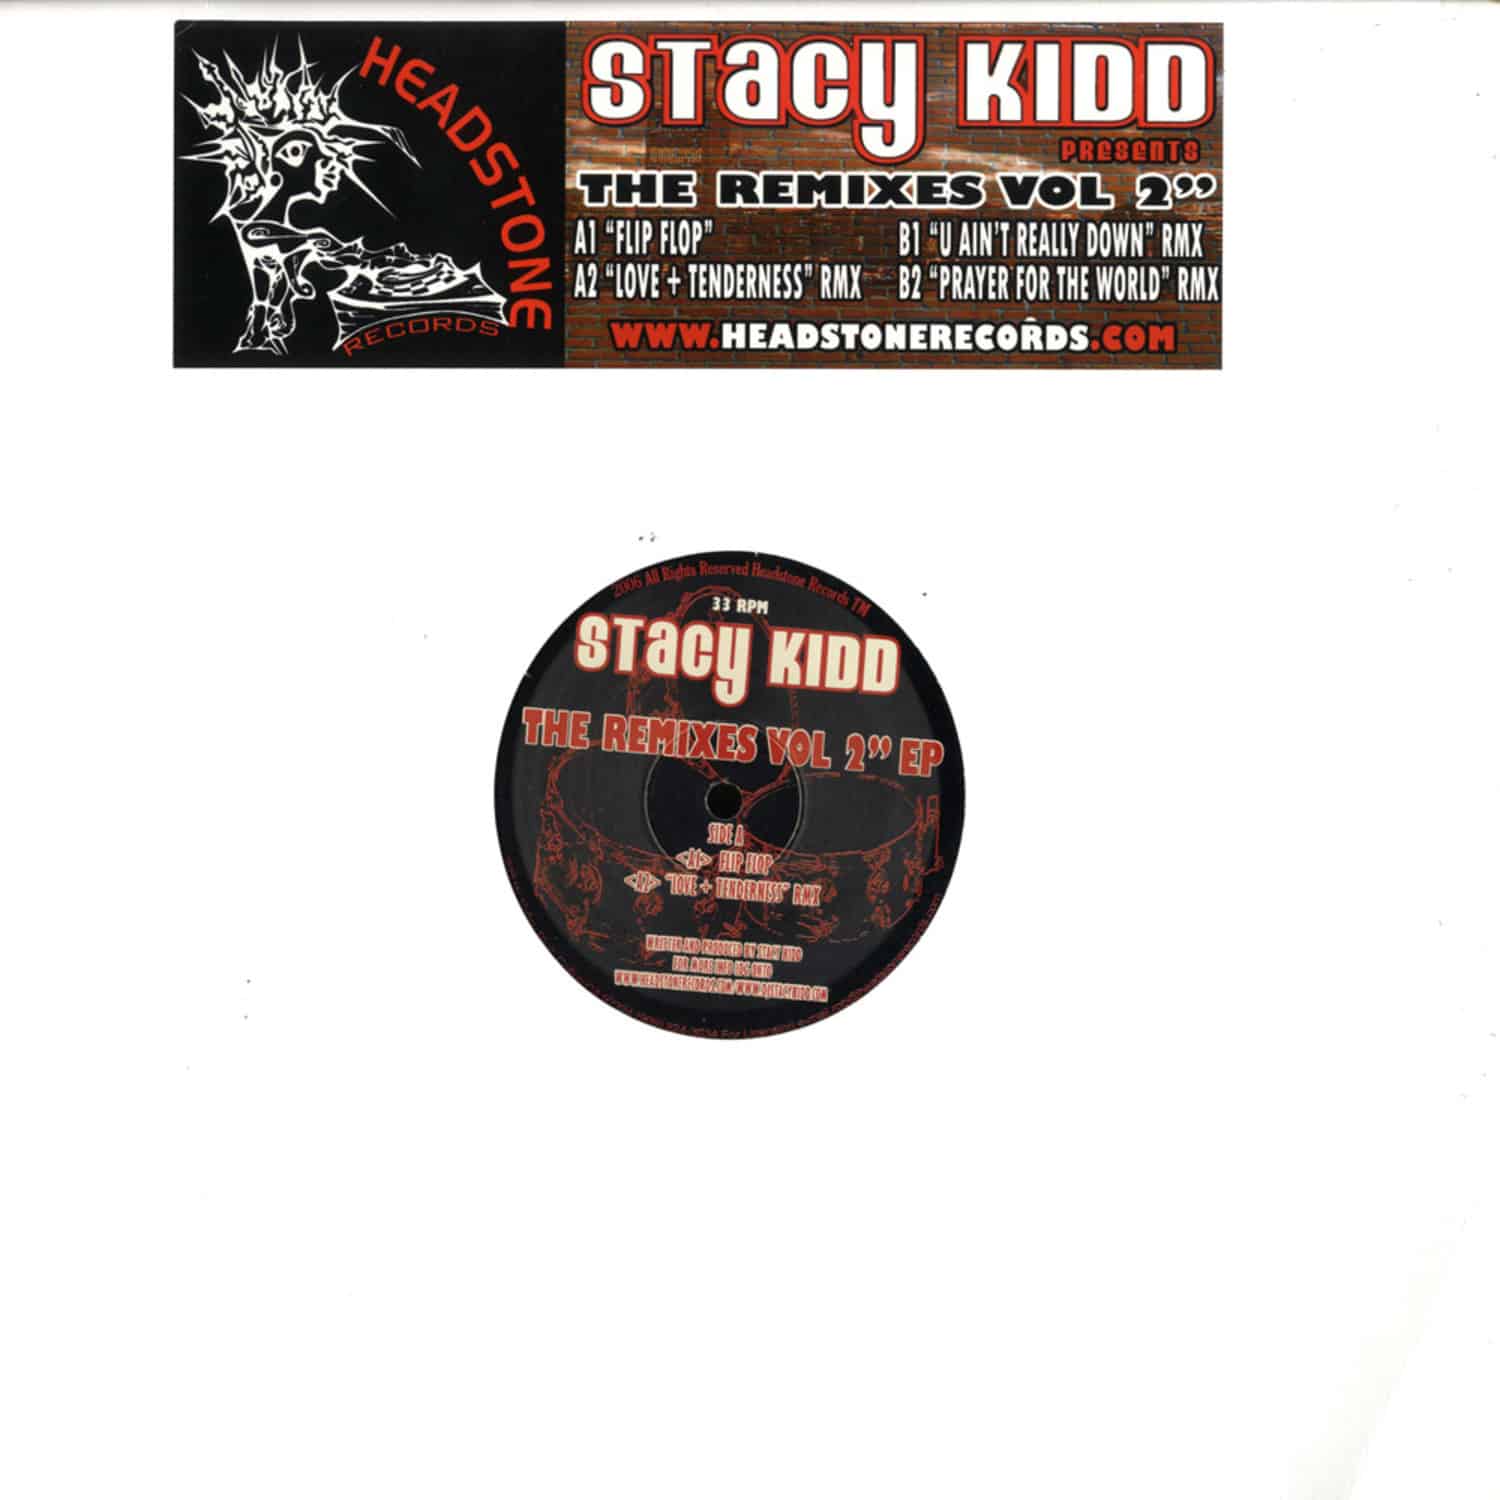 Stacy Kidd - THE REMIXES VOL.2